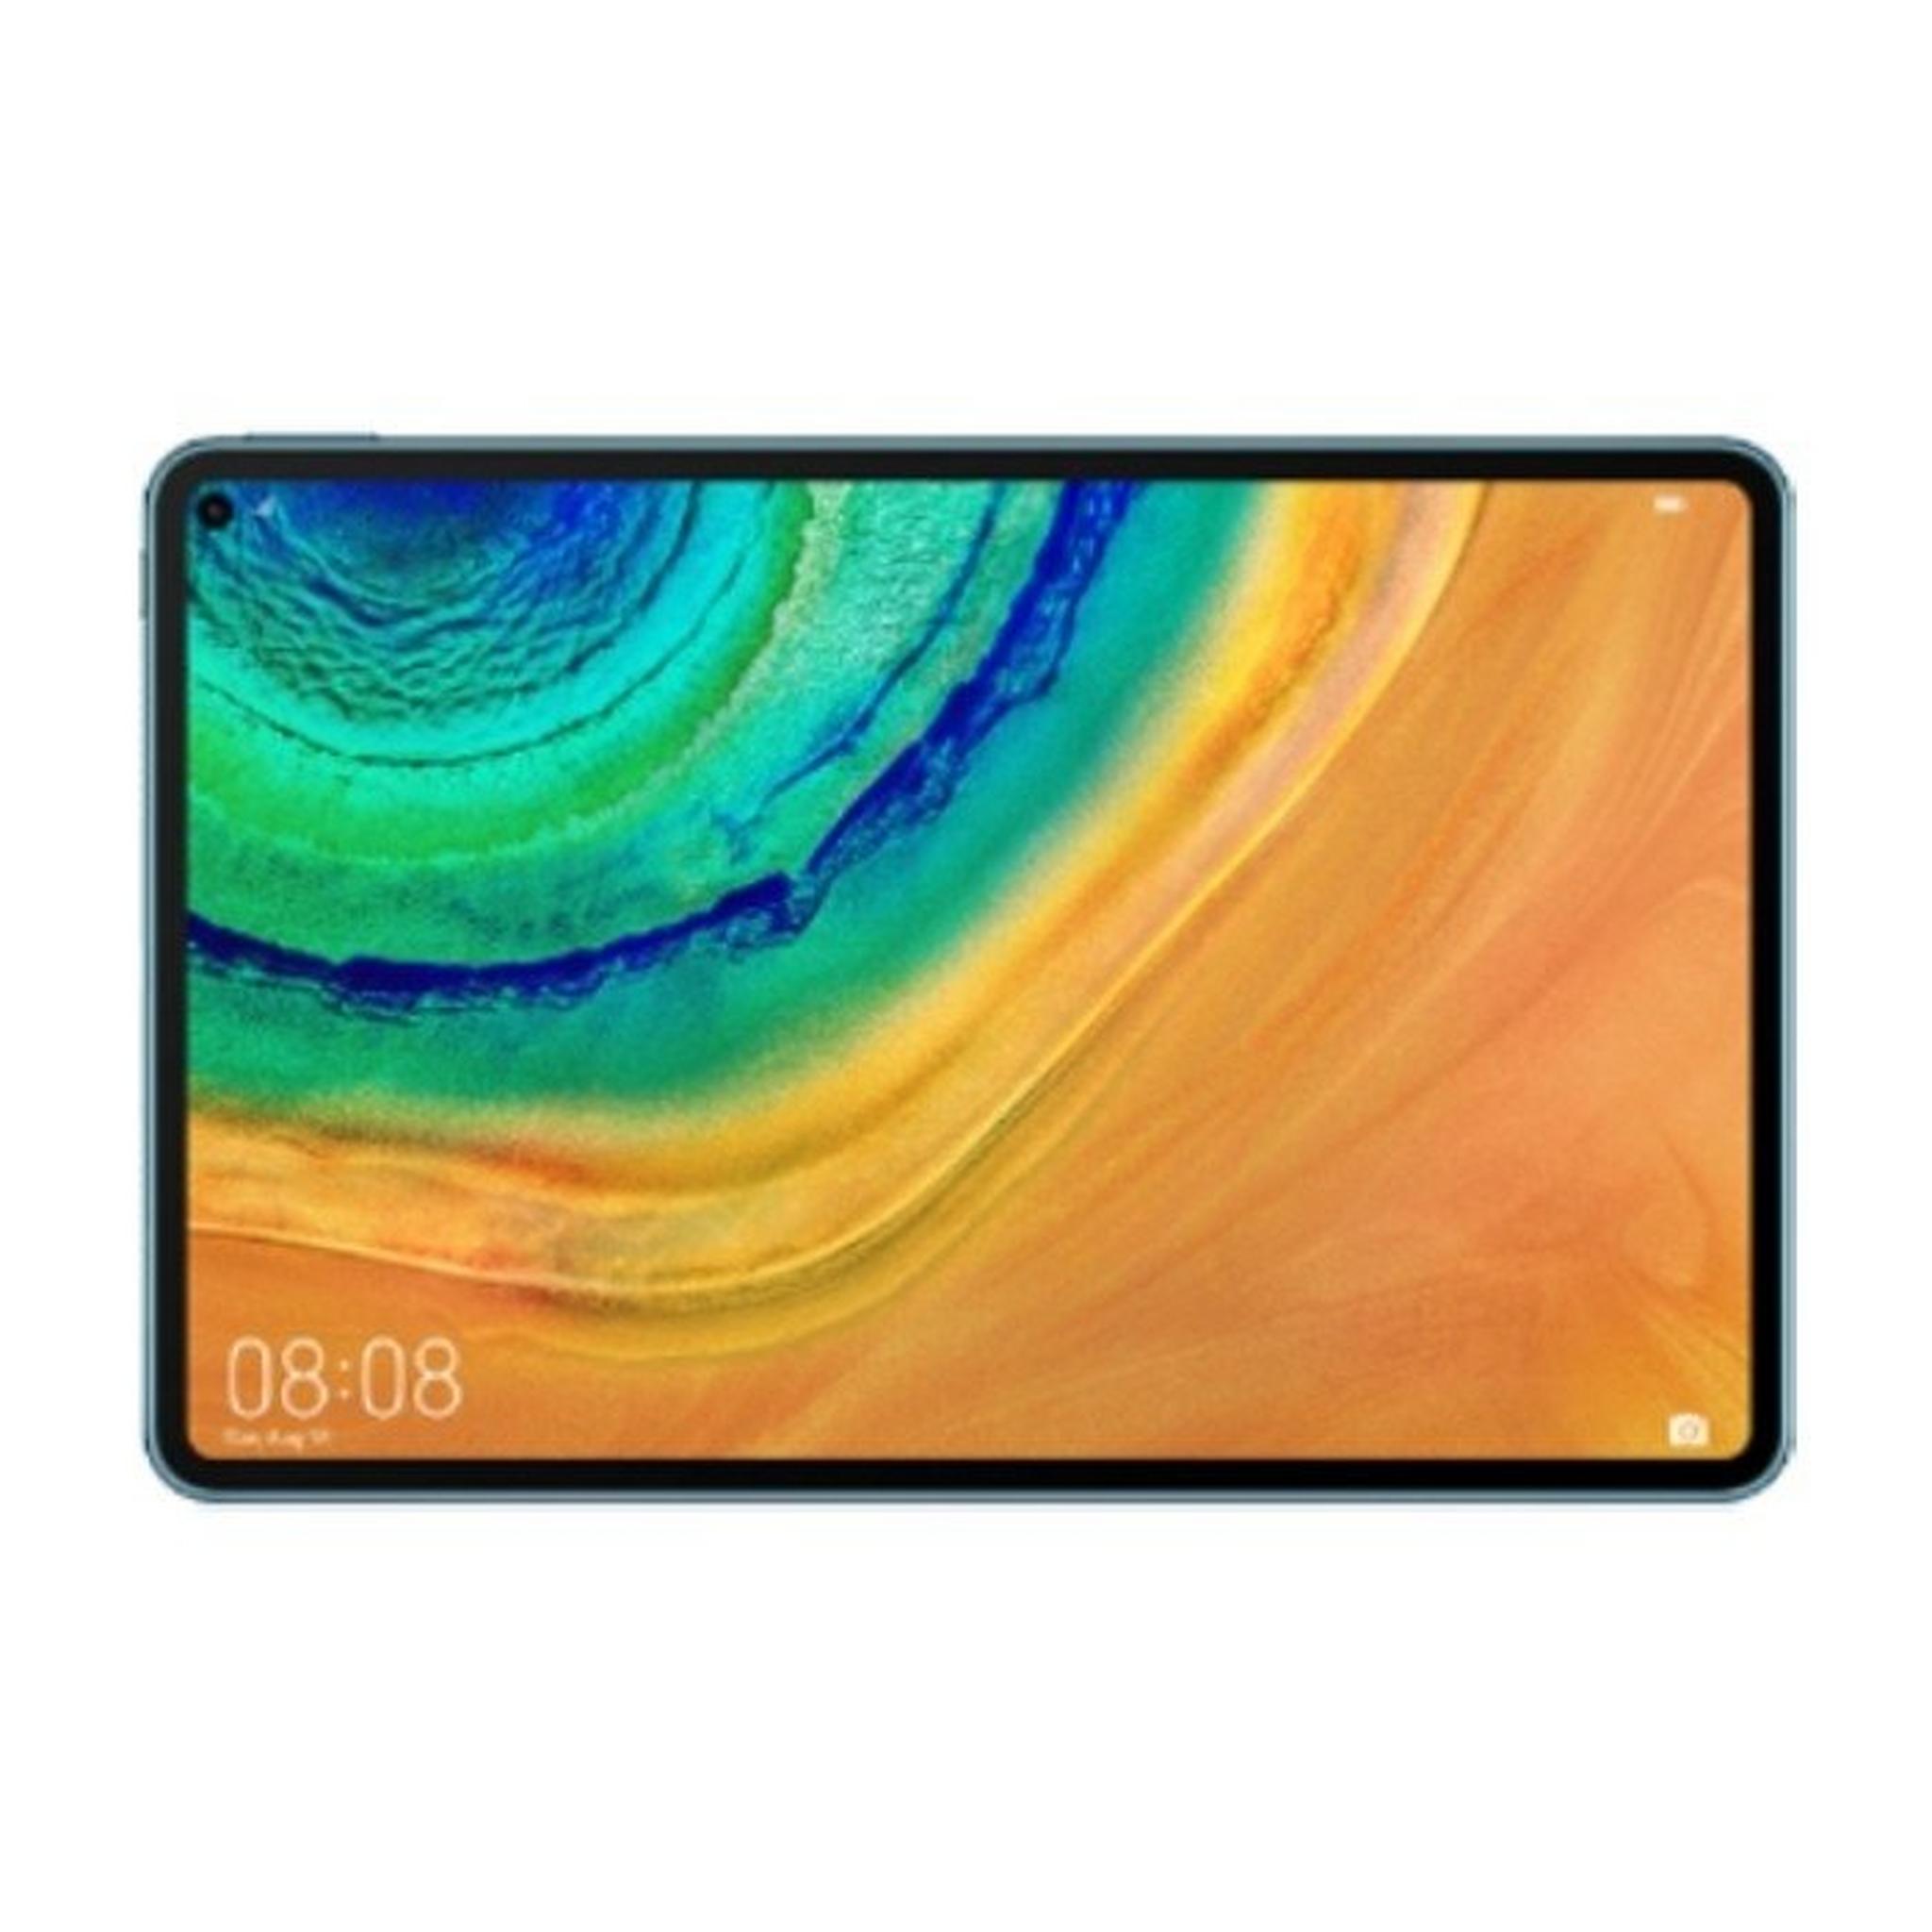 Huawei MatePad Pro 256GB 5G Tablet - Green